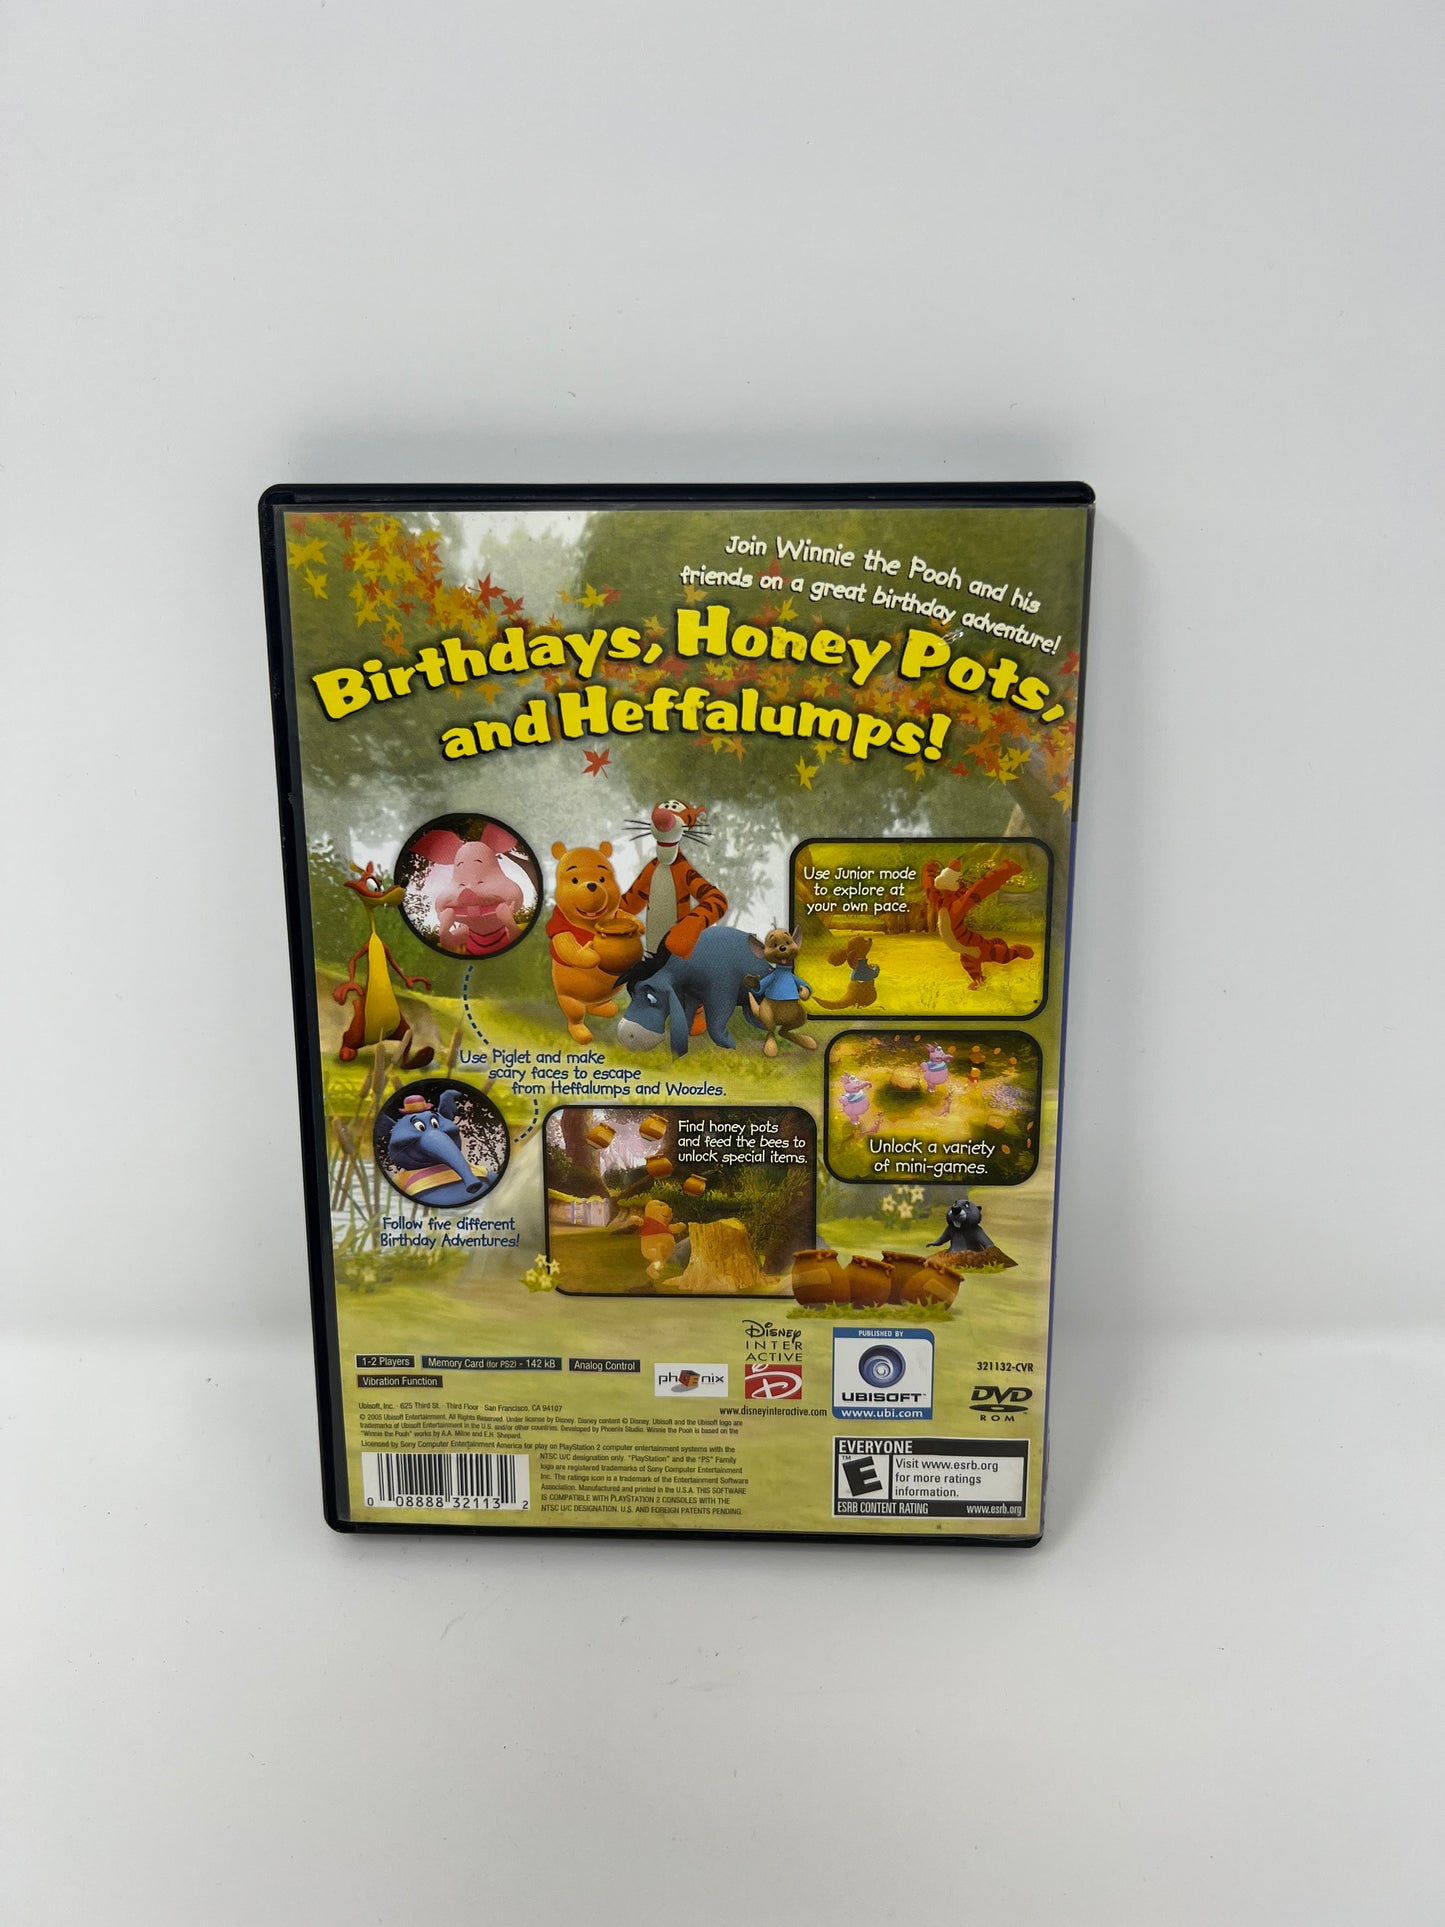 Disney's Kingdom Hearts - PS2 Game - Used – Retroaholics